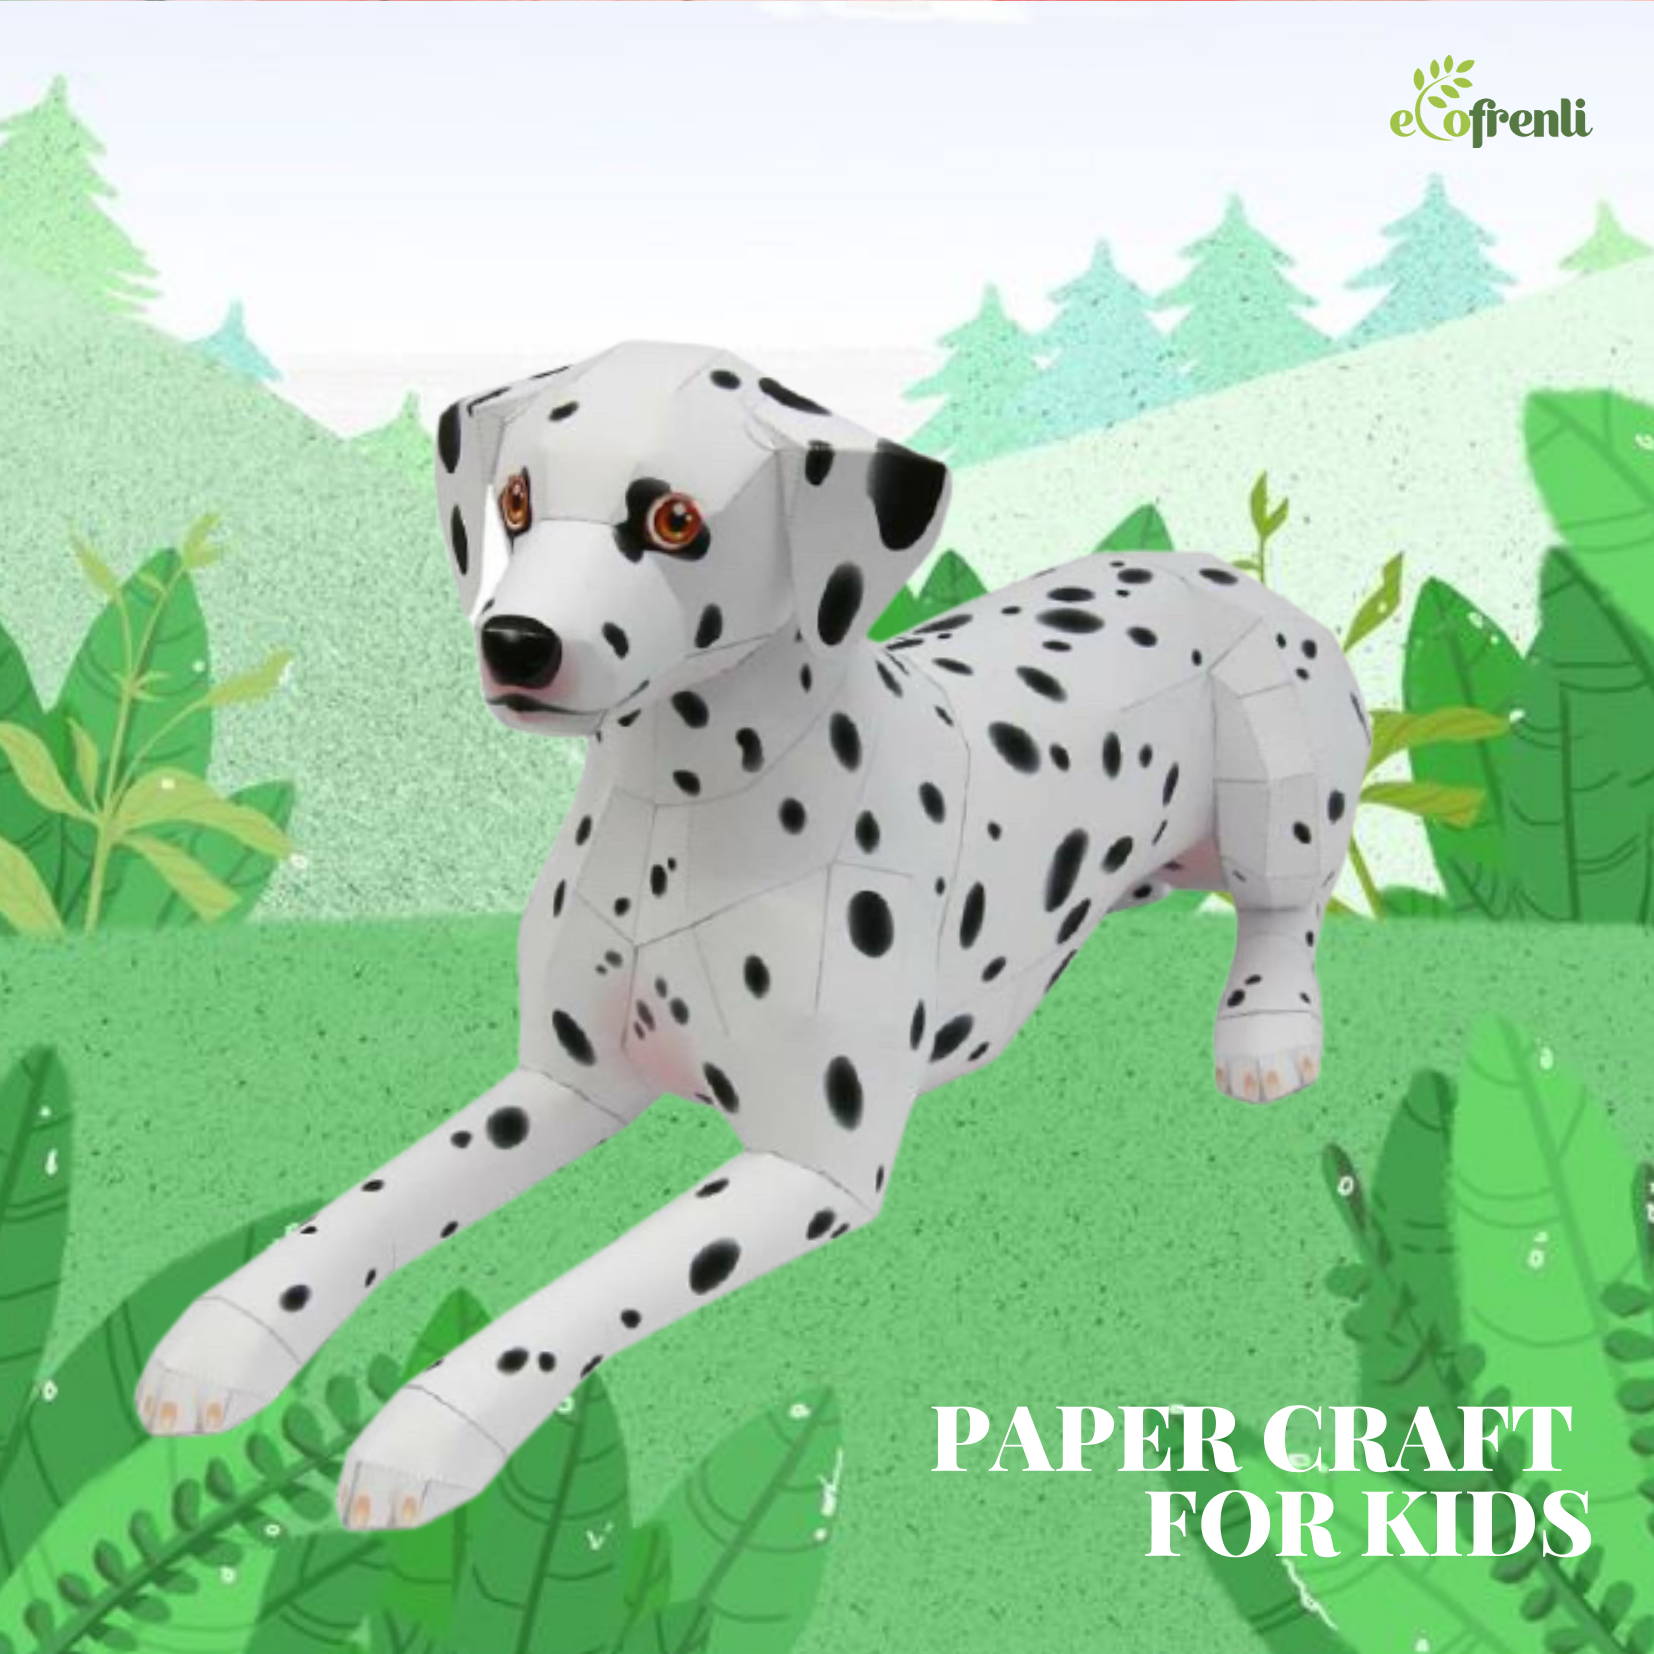 Kids Art Paper craft Toys - Ecofrenli.com